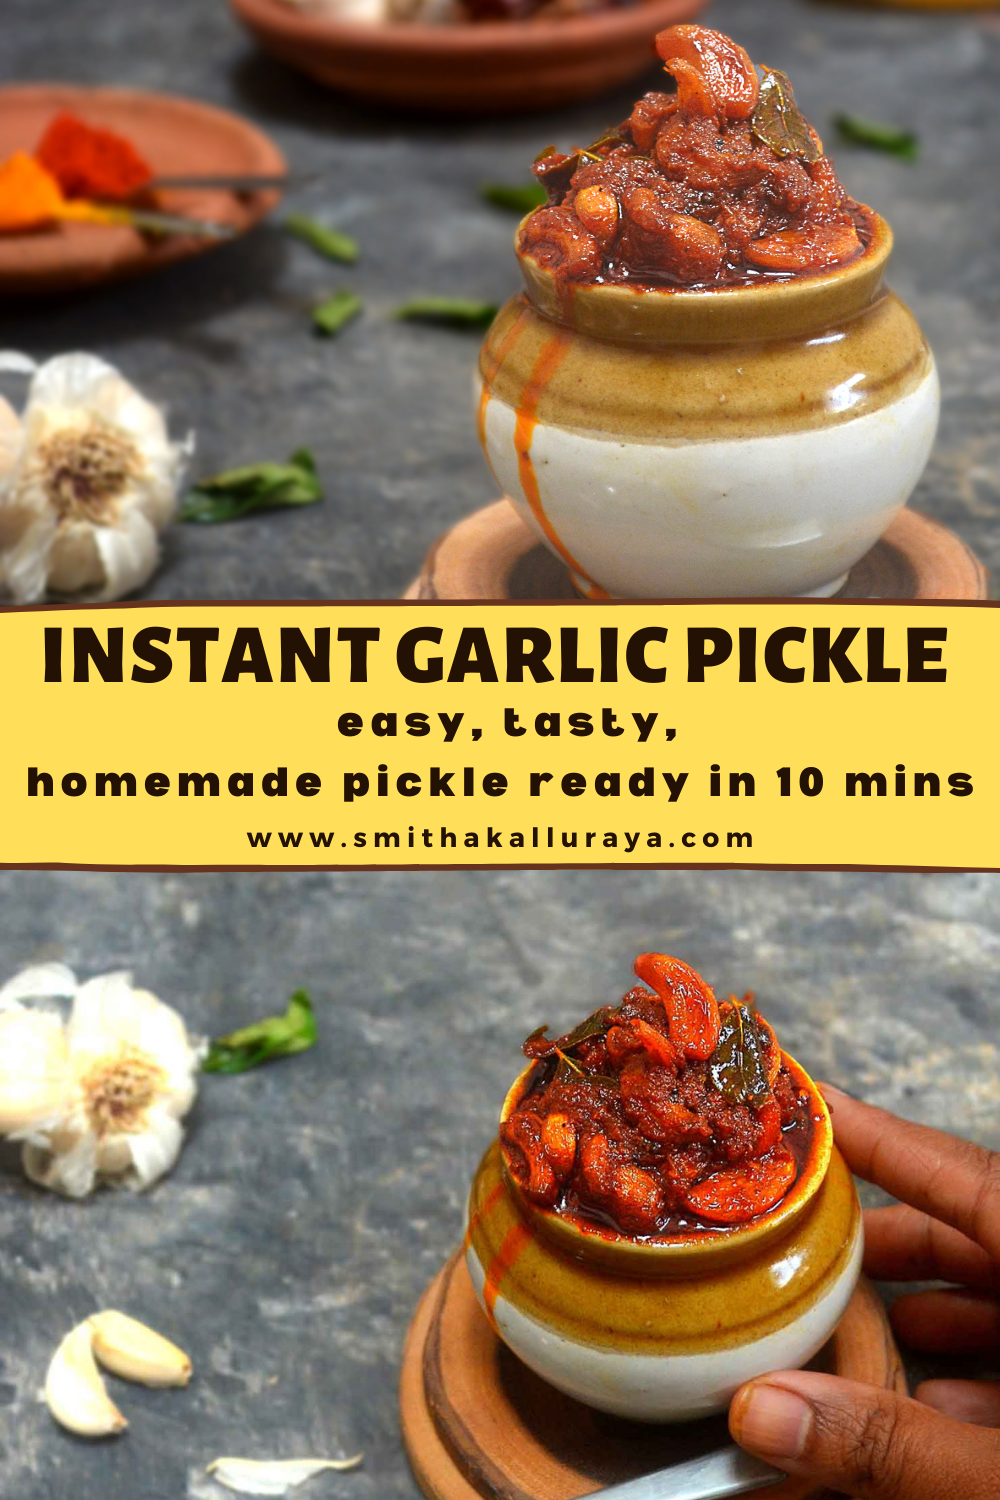 easy tasty instant garlic pickle ready in 10 mins !! #pickle #GarlicPickle #IndianPickle #InstantPickle